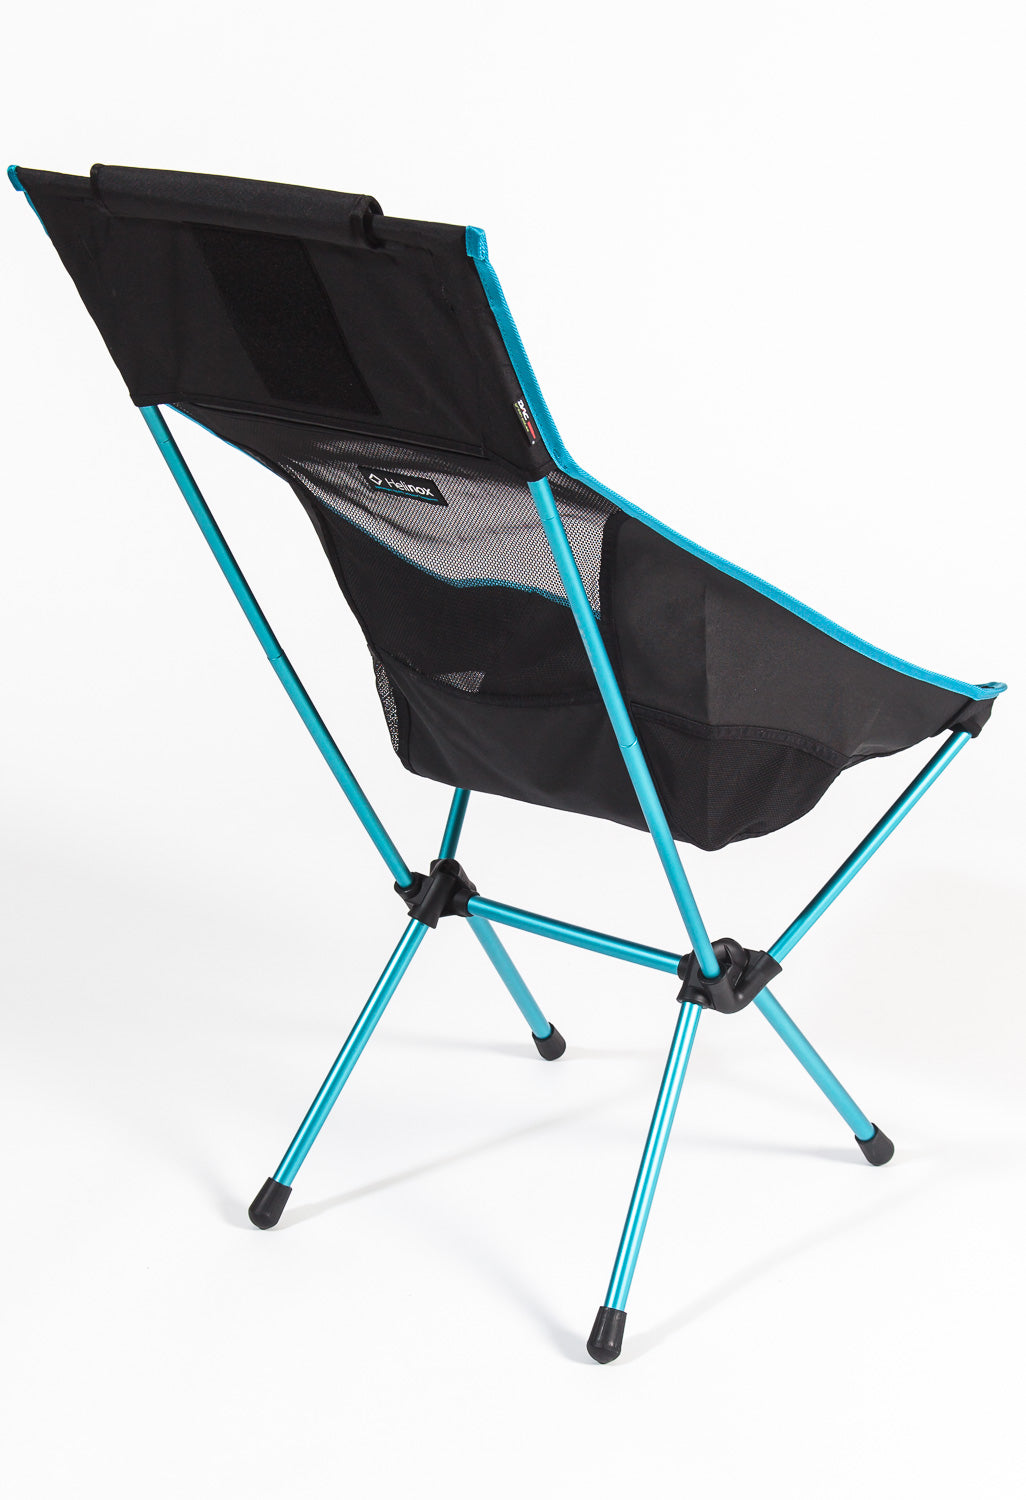 Helinox Sunset Chair - Black/Blue